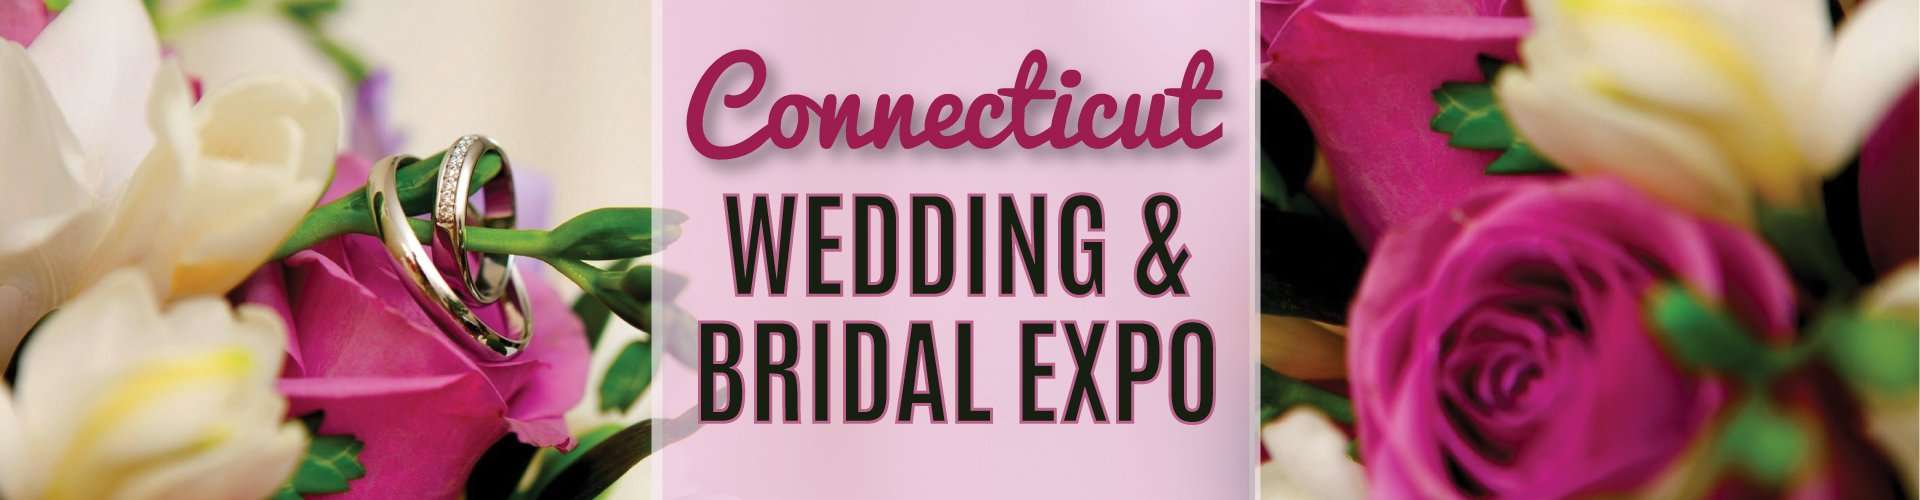 Connecticut Bridal Expo